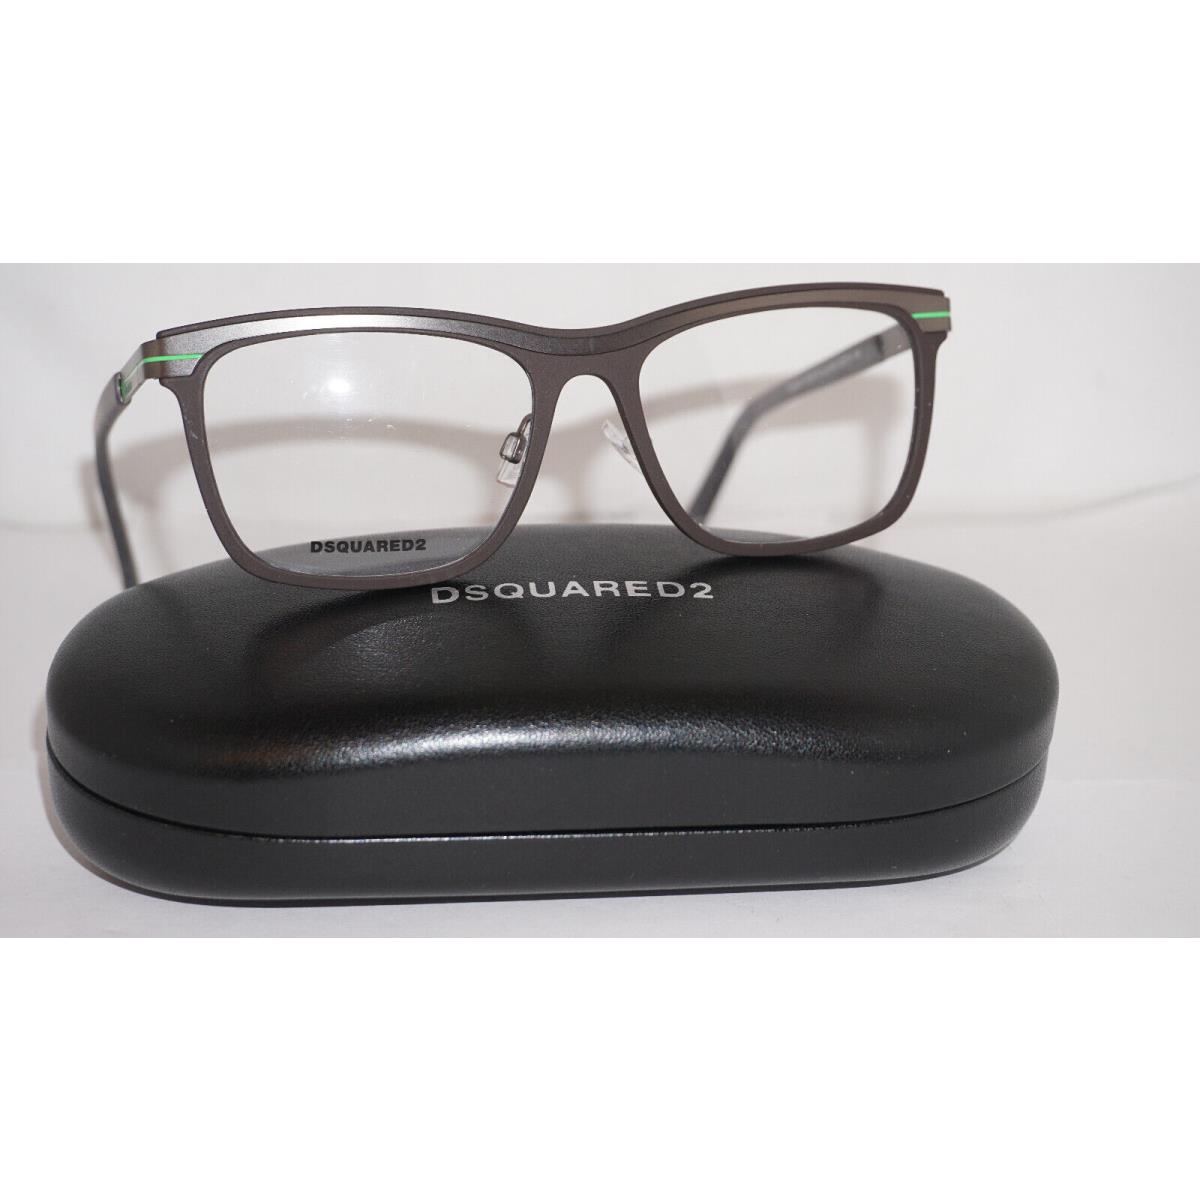 DSQUARED2 Eyeglasses Munich Brown Green DQ51756 049 53 16 140